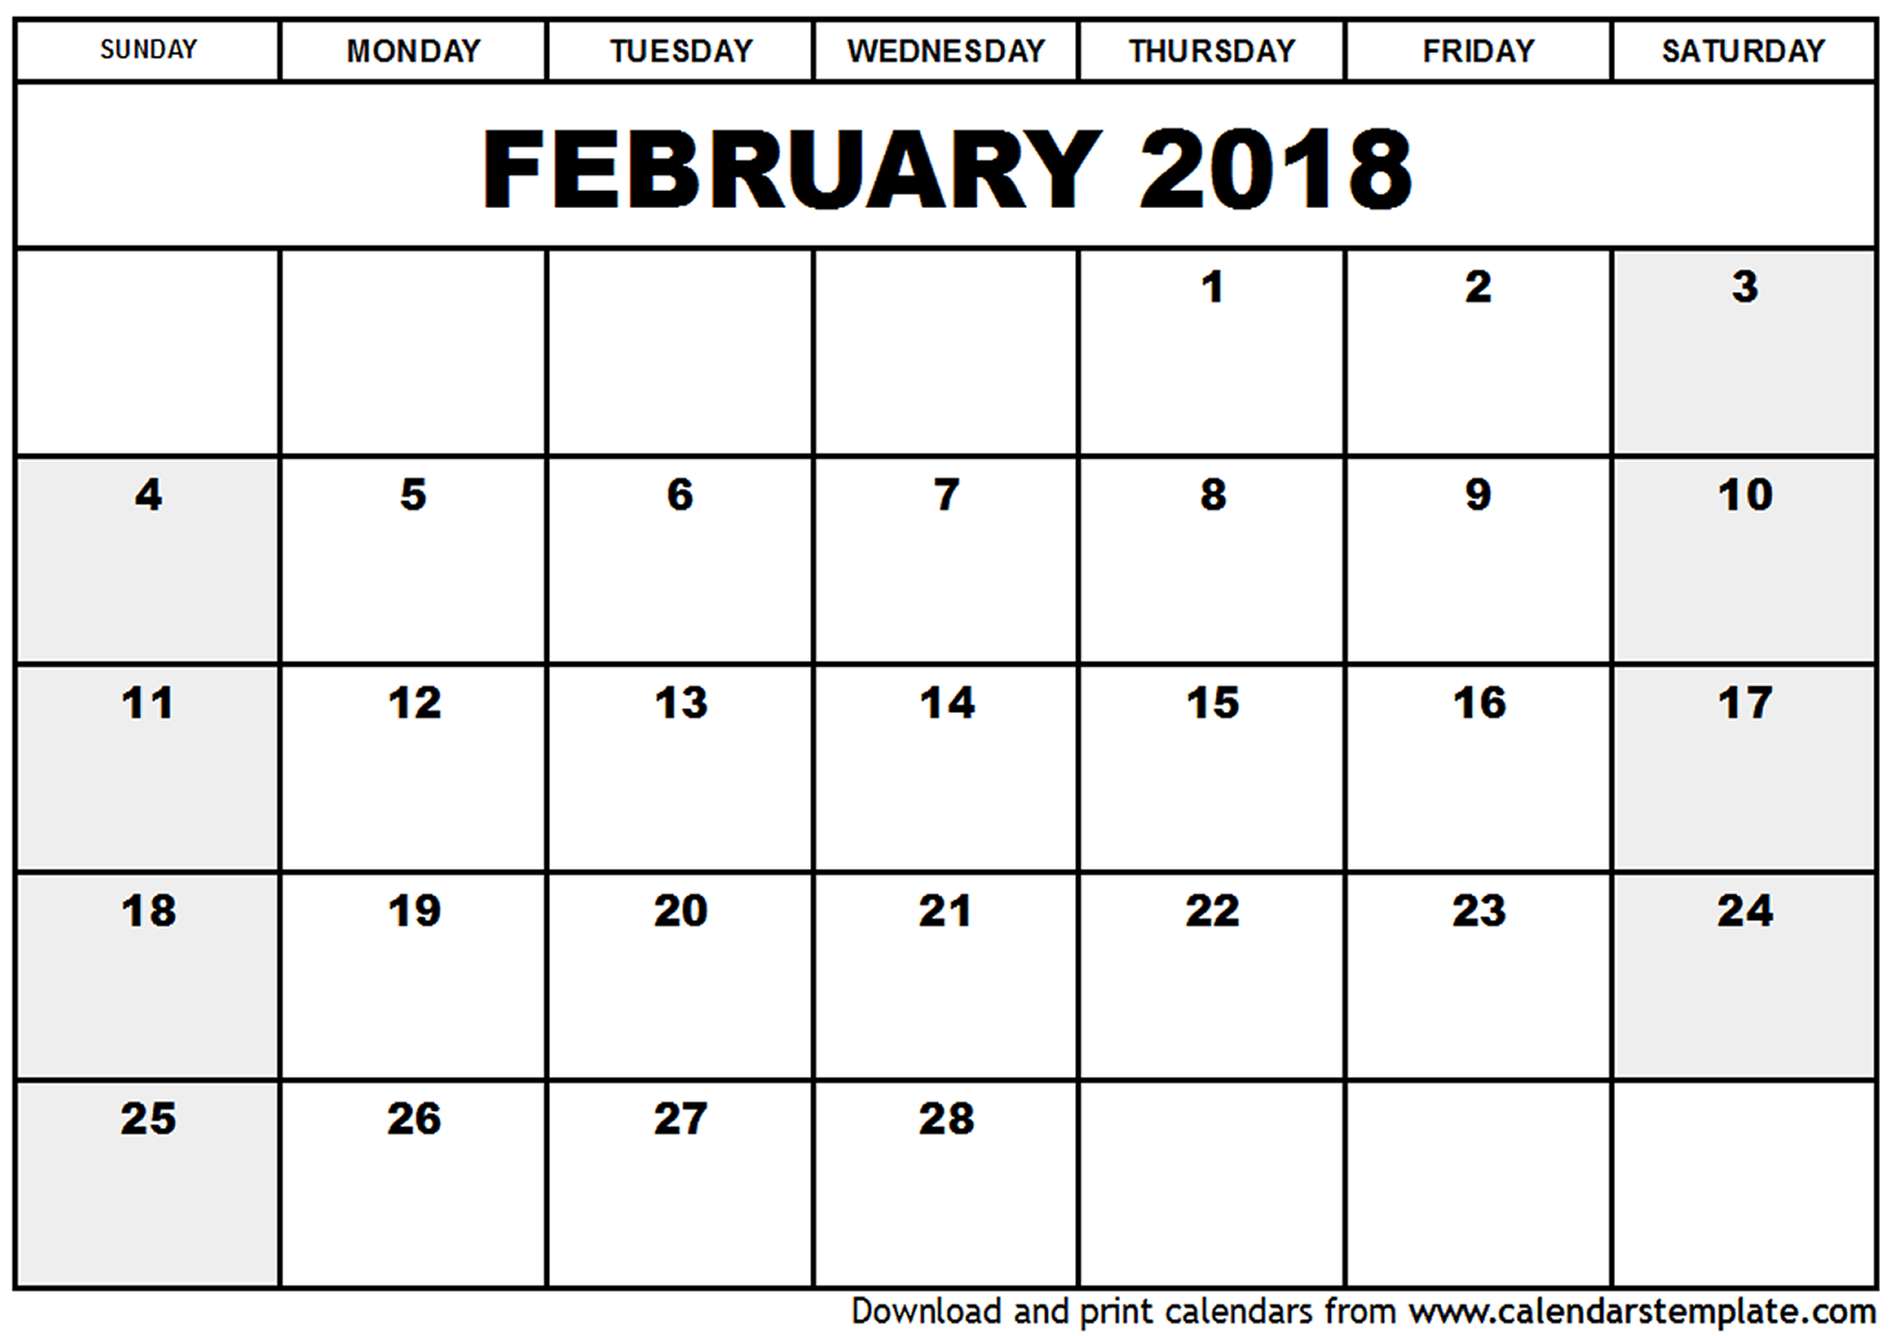 February 2018 Calendar